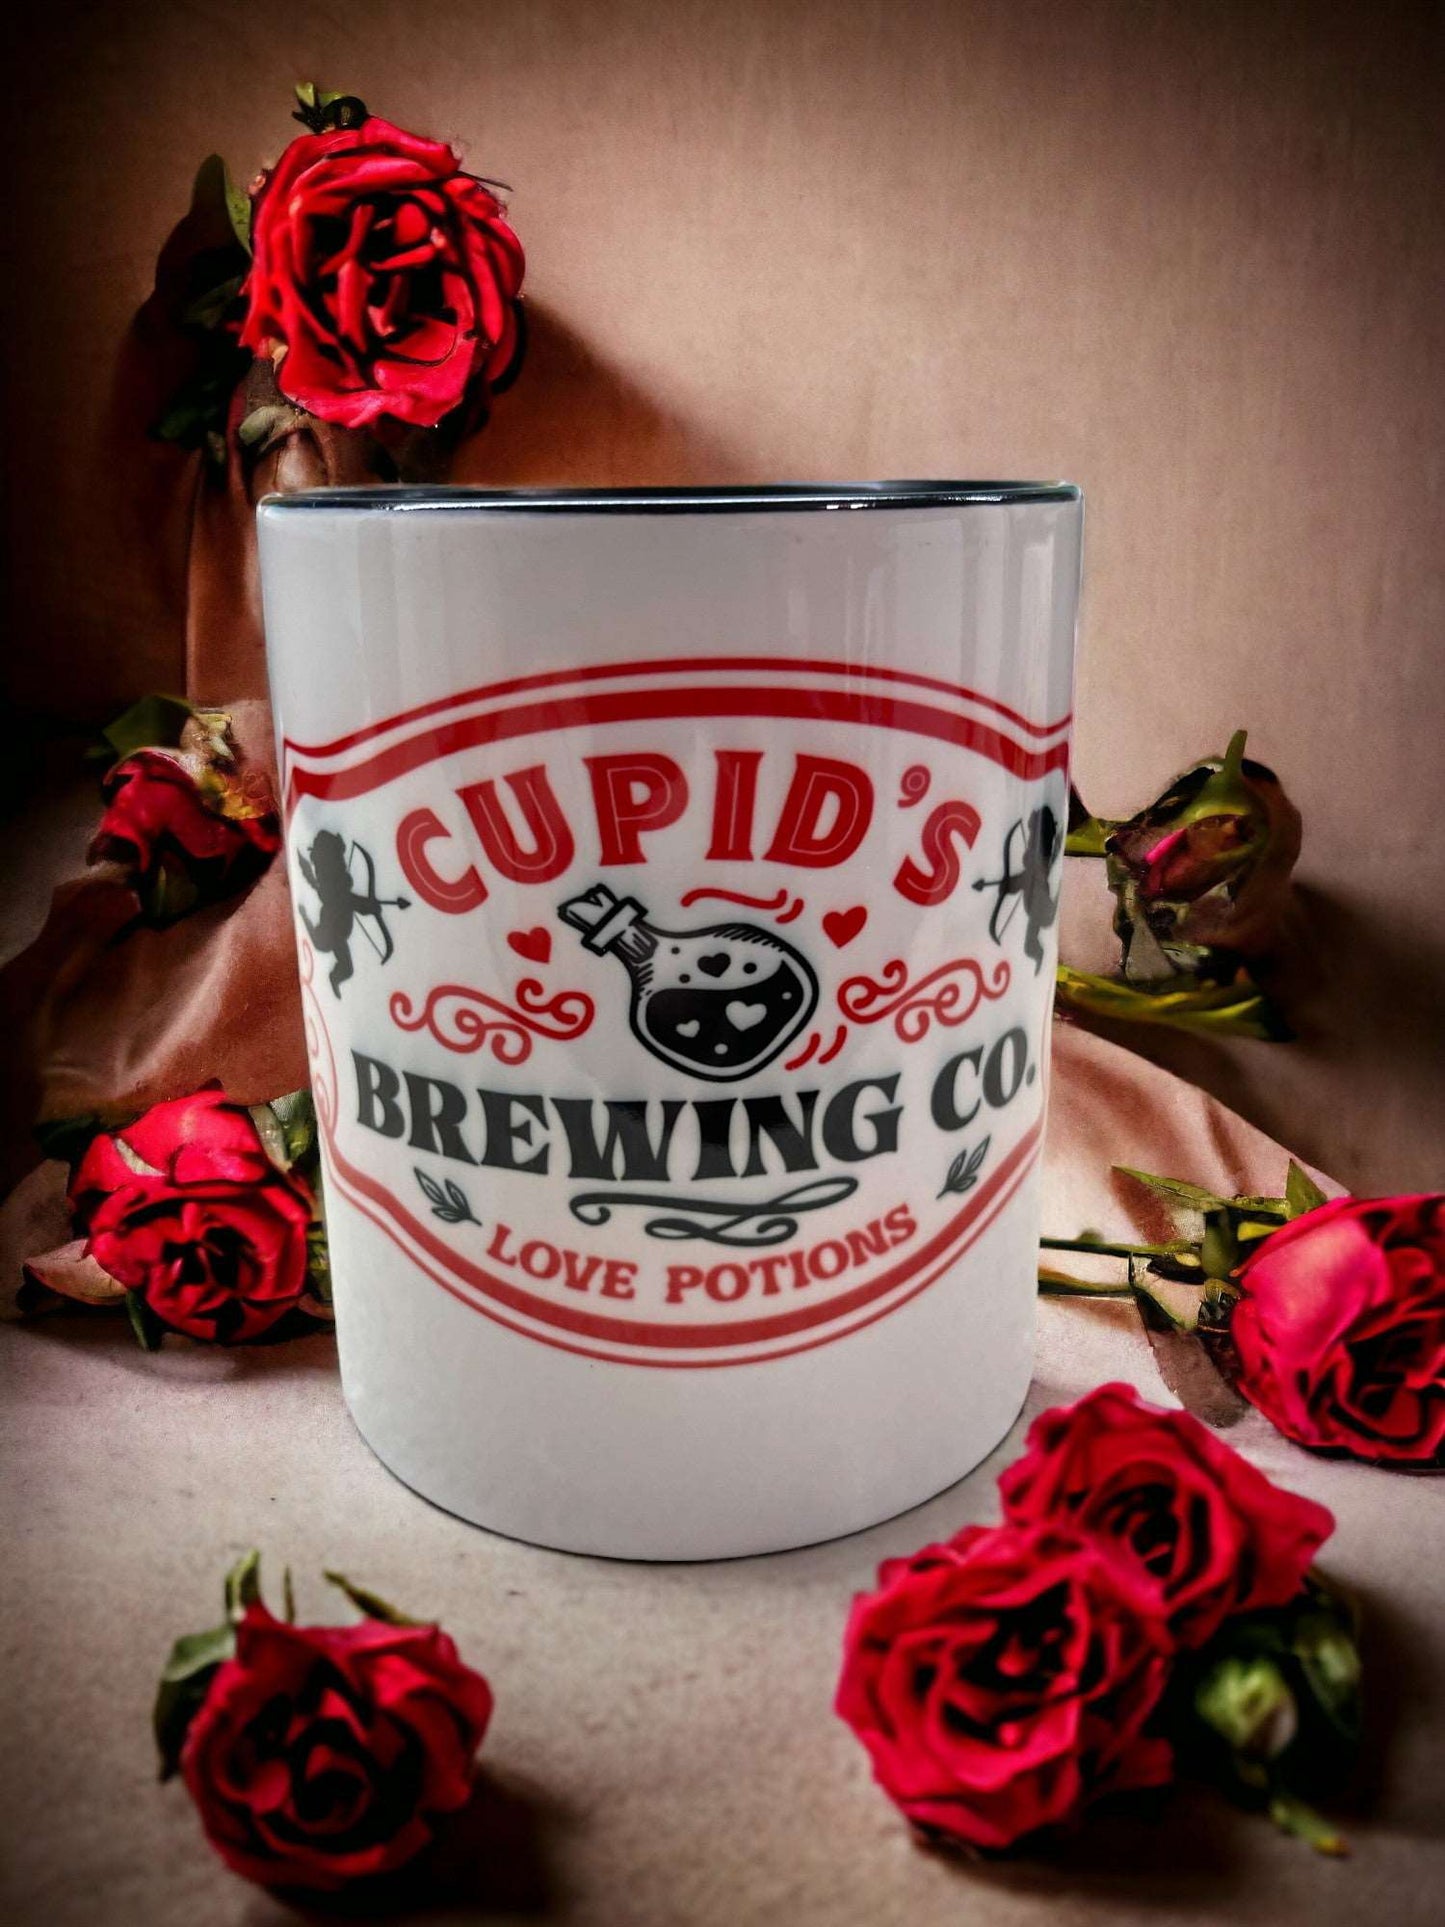 11oz Cupids Brewing Co Love Potions Coffee Mug